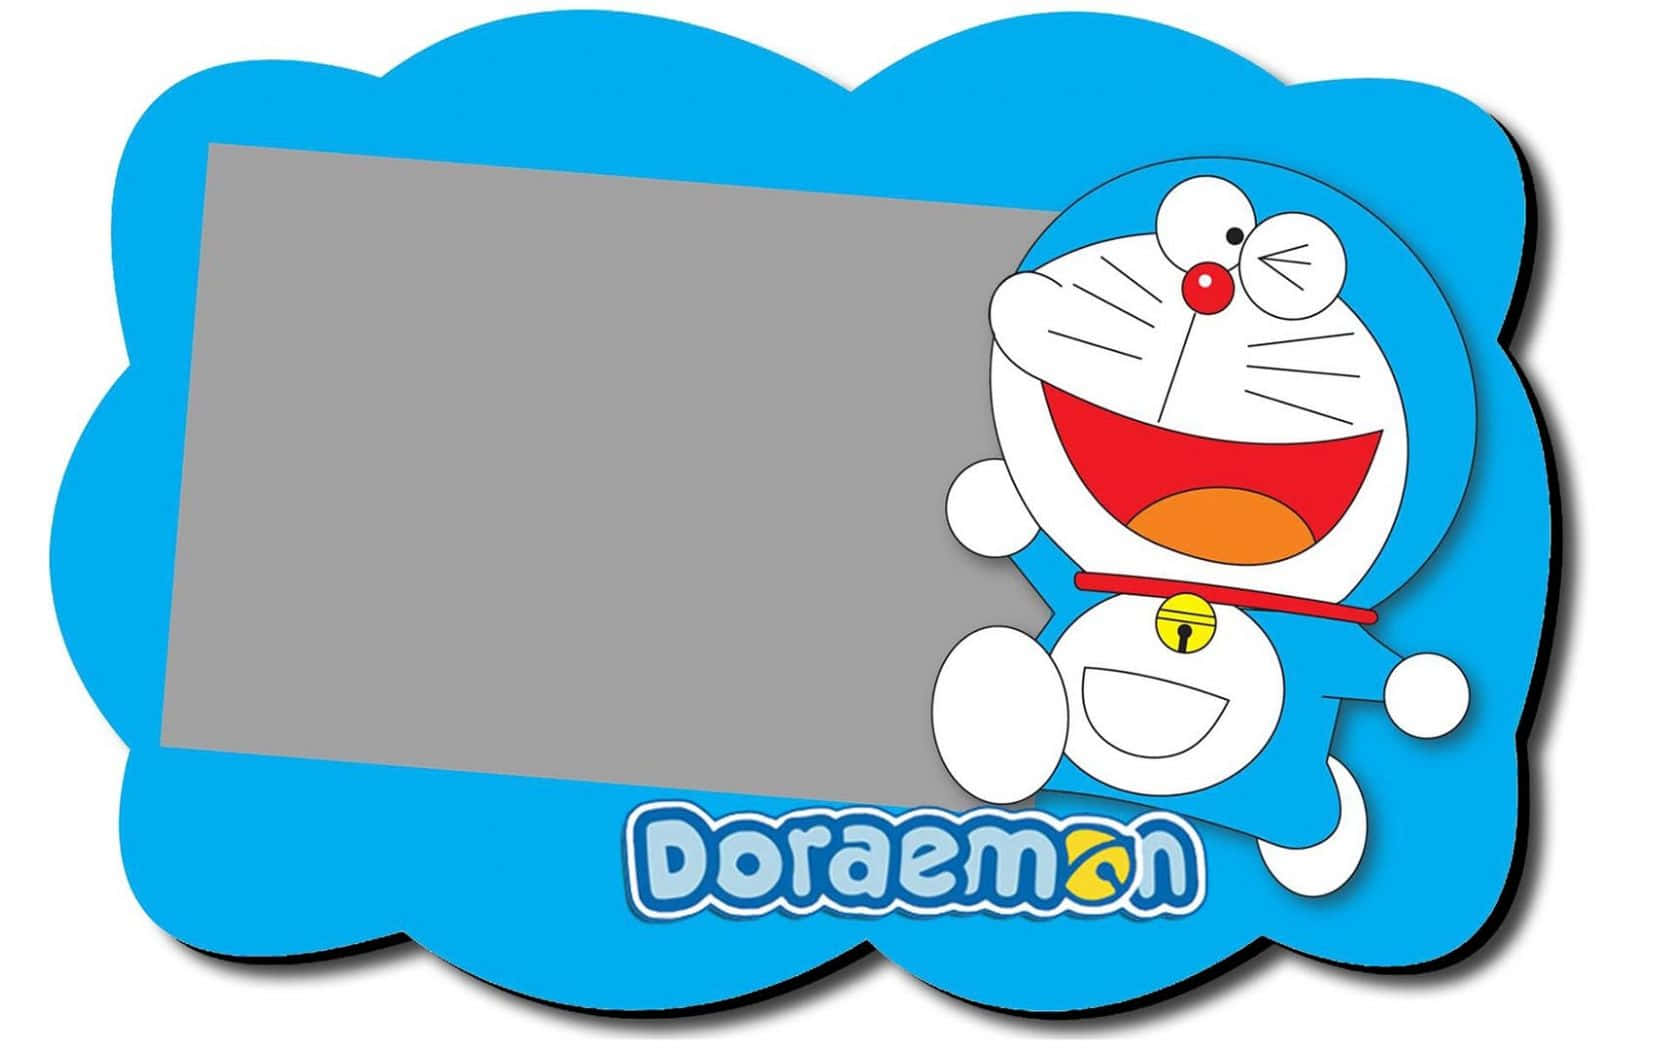 Denälskade Japanska Robotkatten, Doraemon